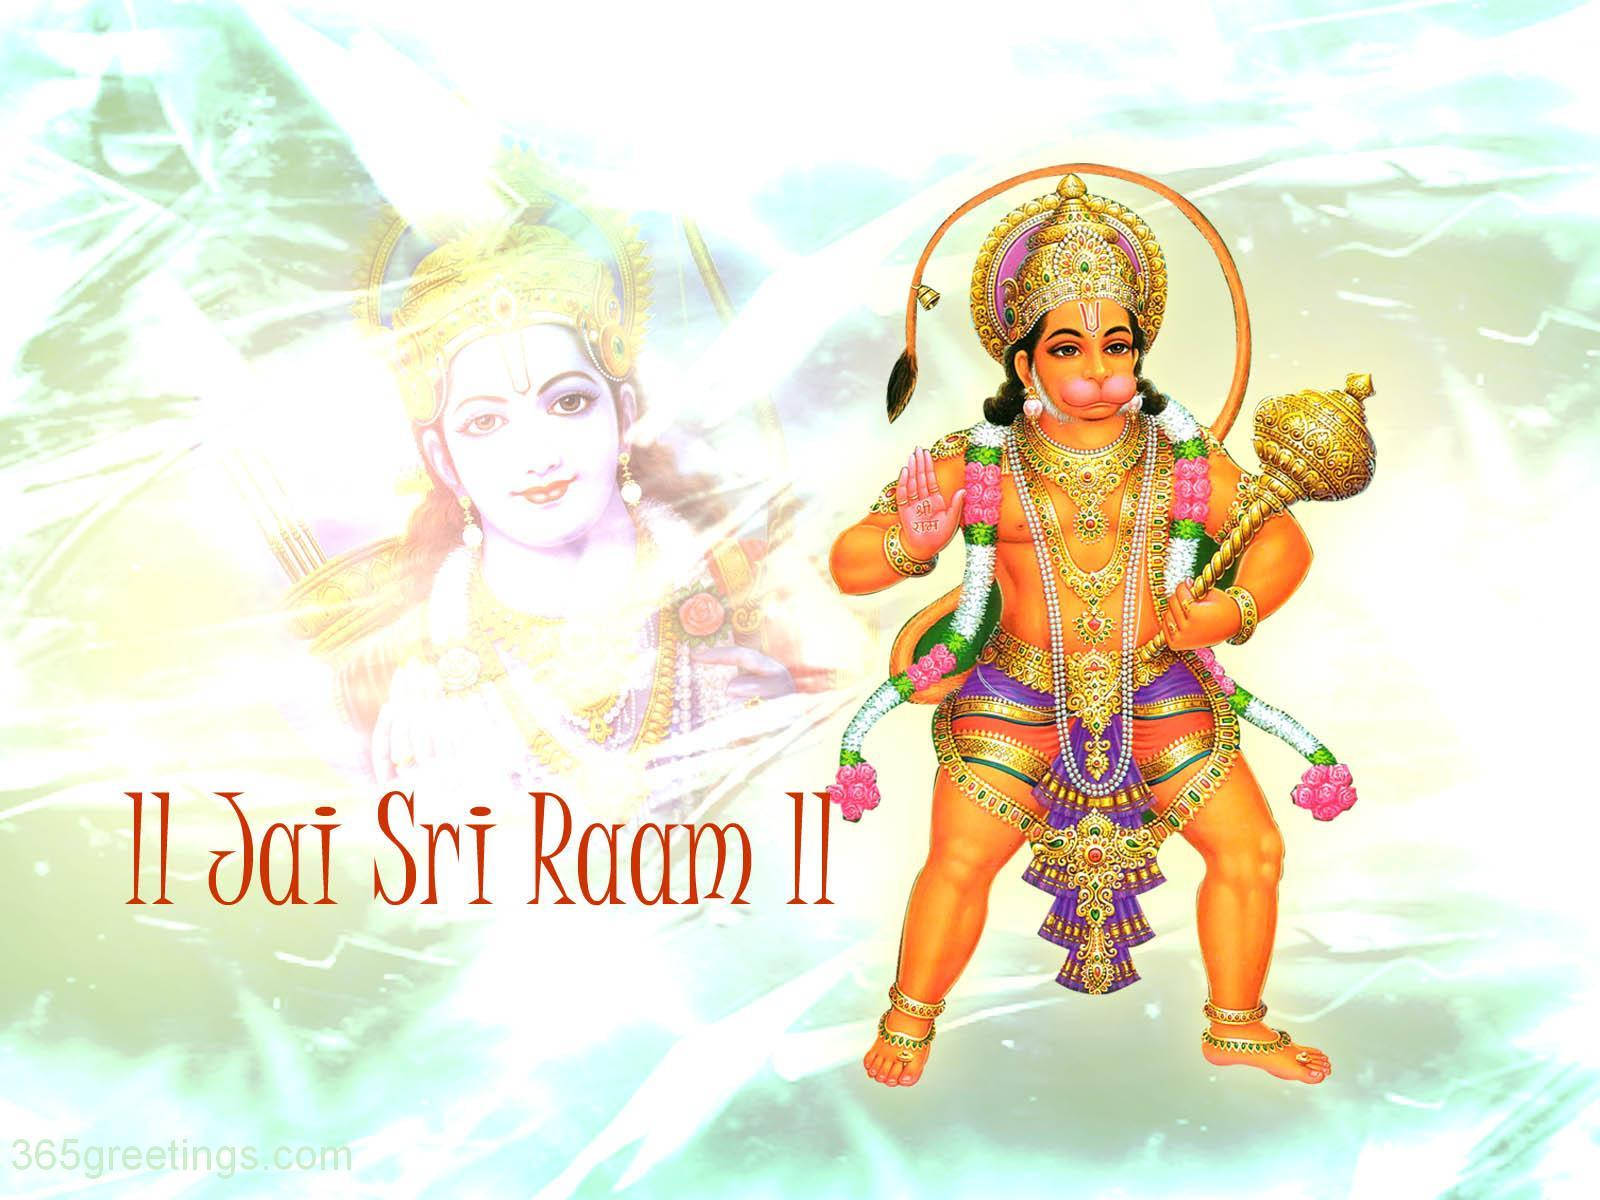 Jai Shri Ram Hanuman With Mace And Rama